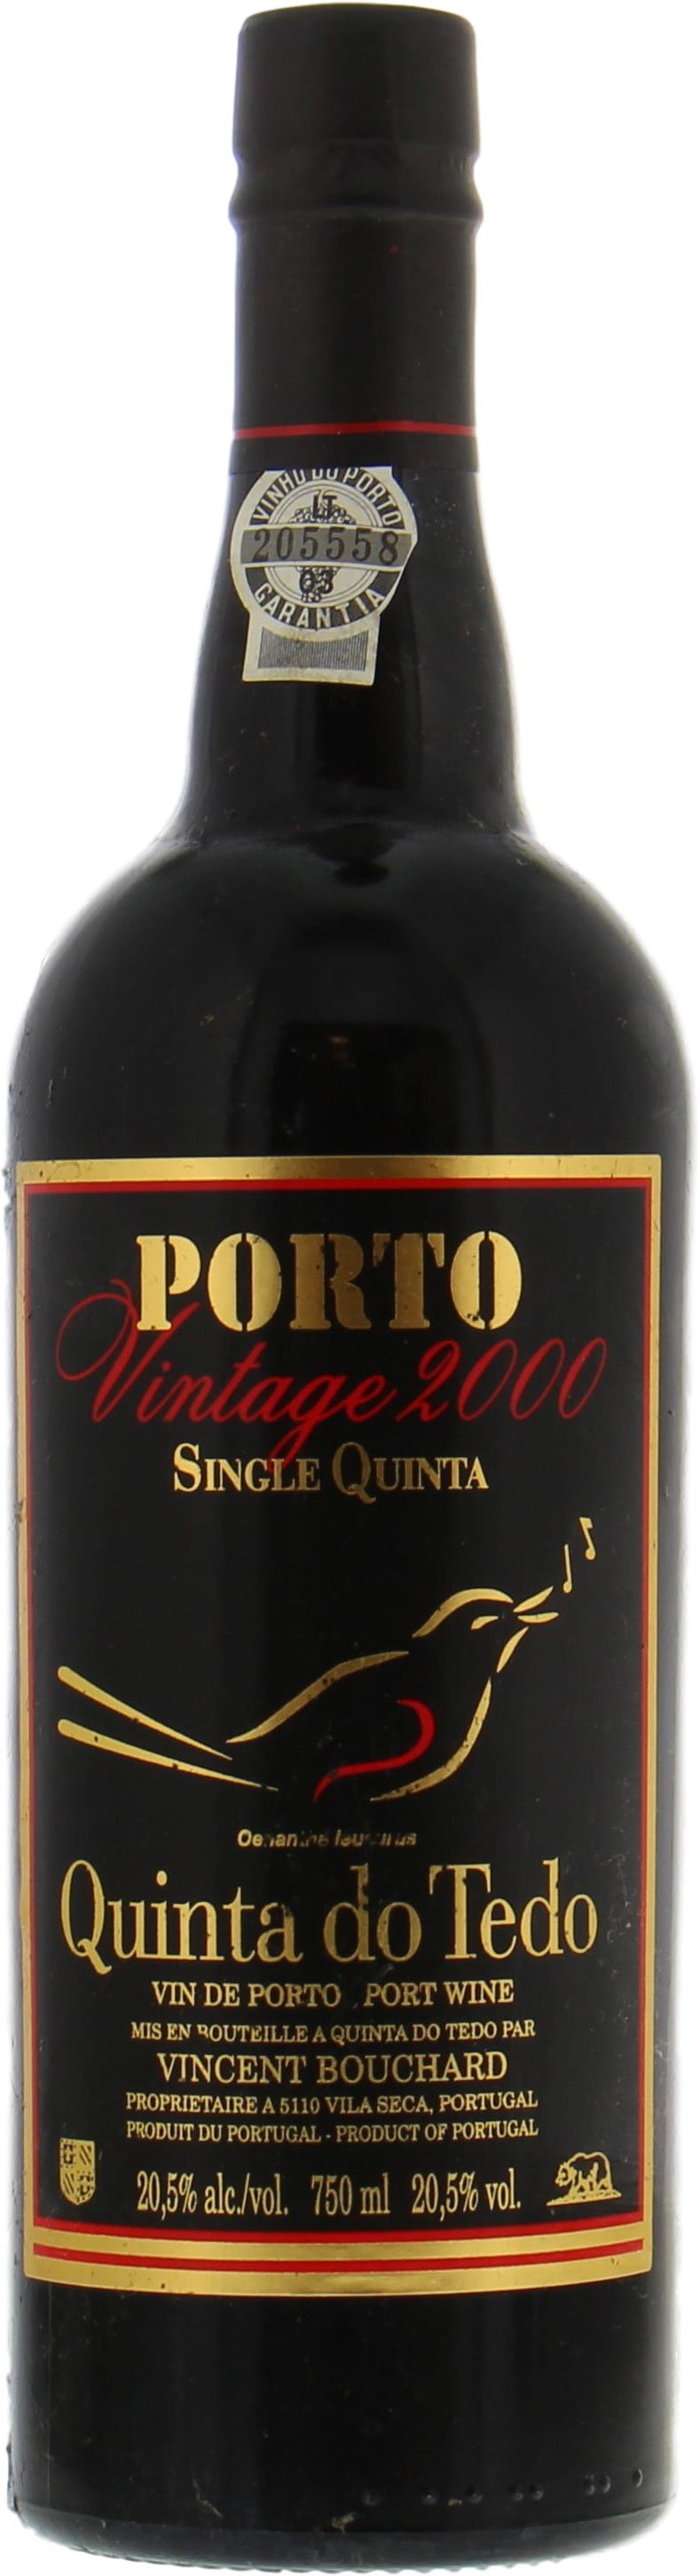 Quinta do Tedo - Vintage Port 2000 Perfect